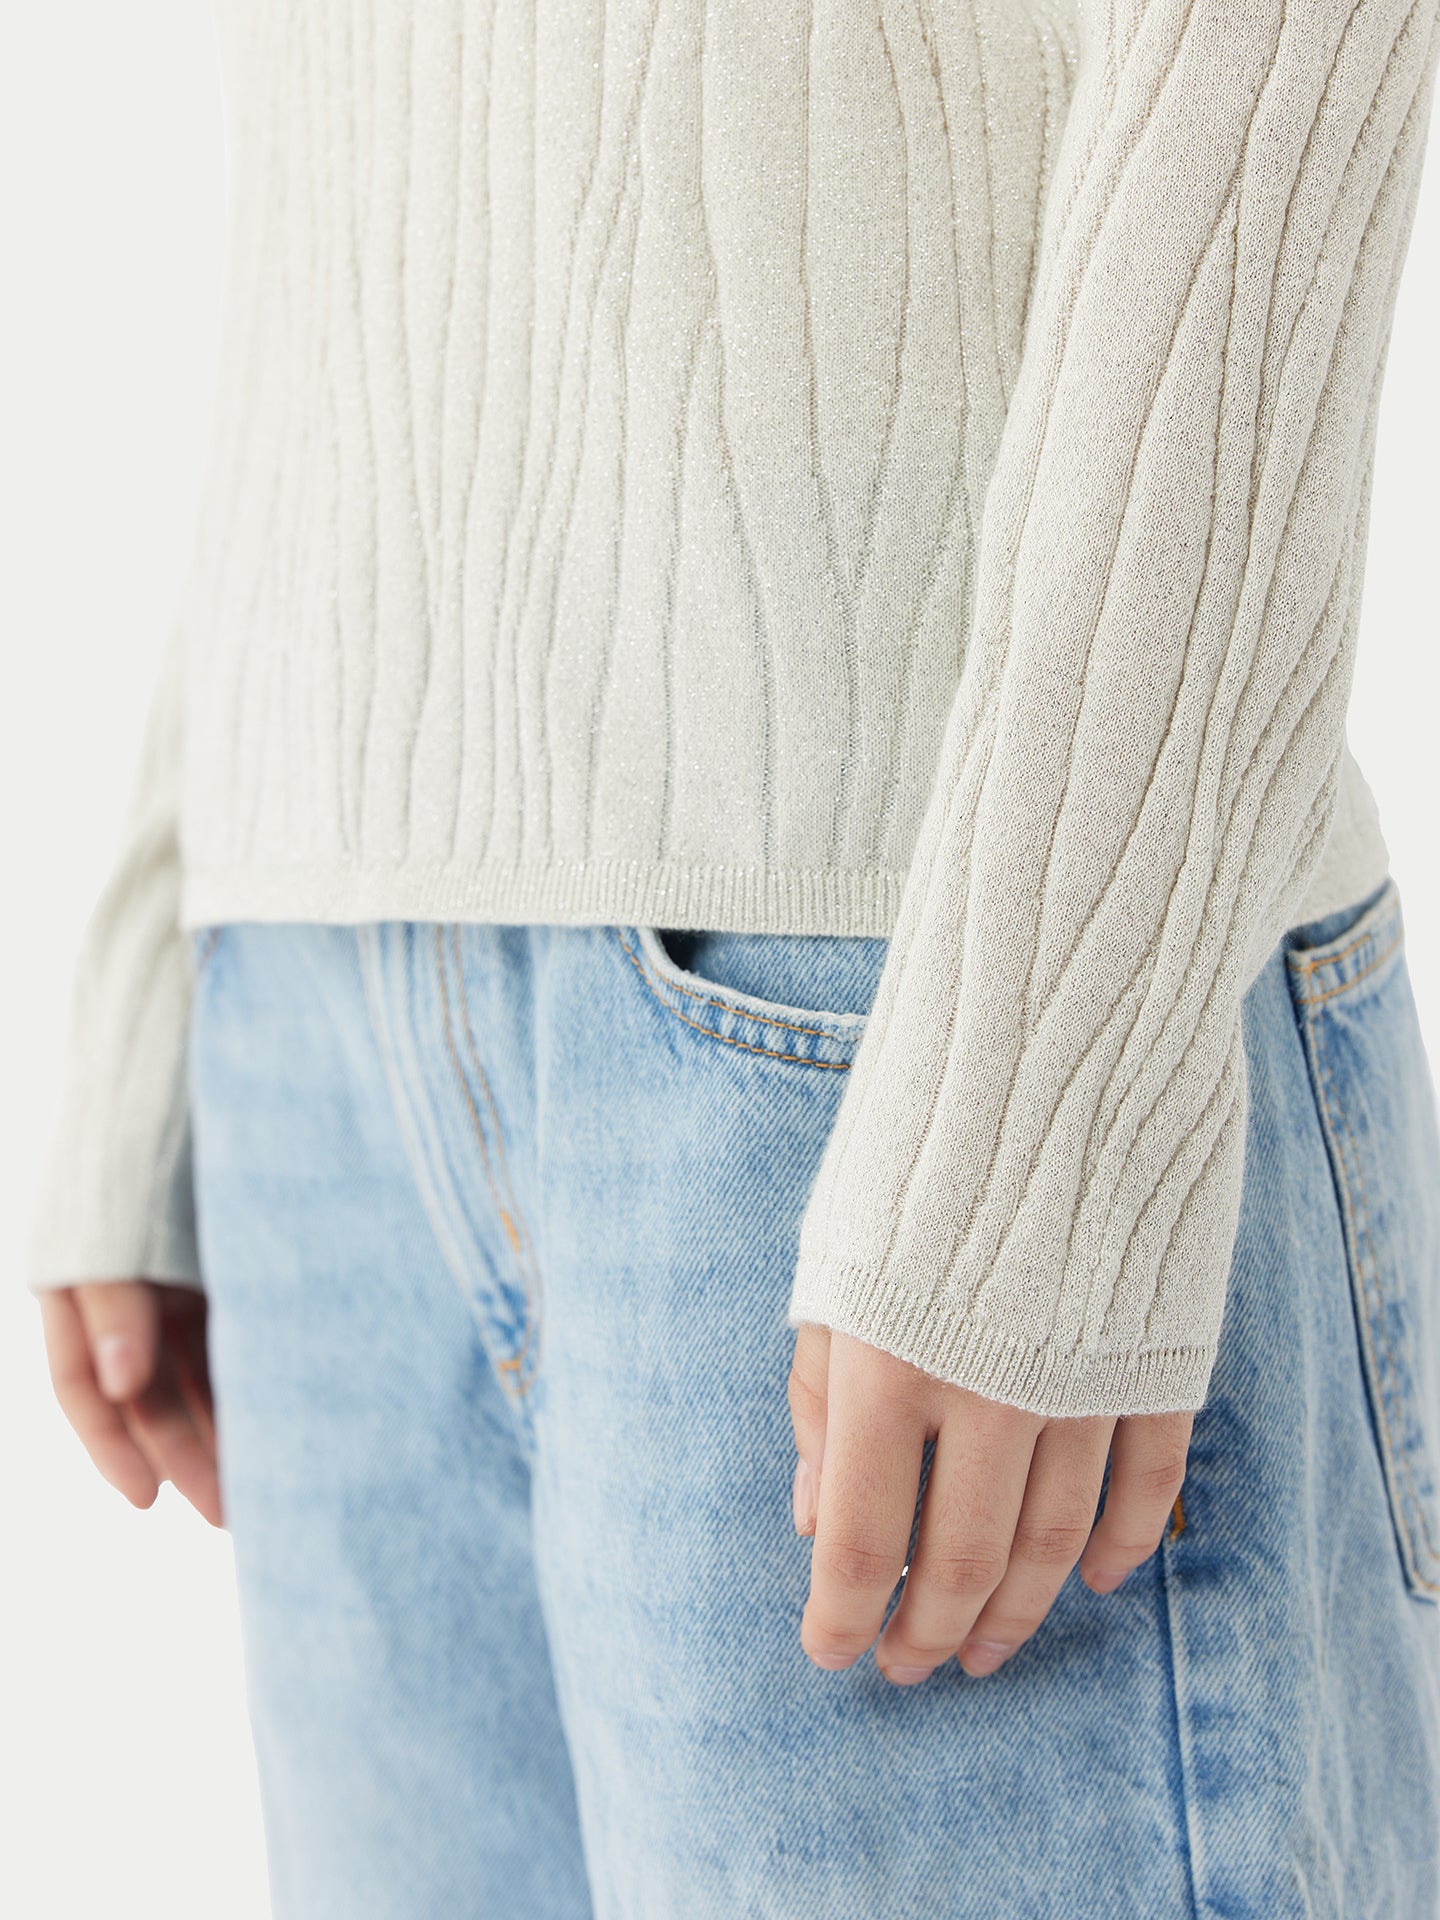 Women's Cashmere Silk Sweater with Silver Threading Whisper White - Gobi Cashmere